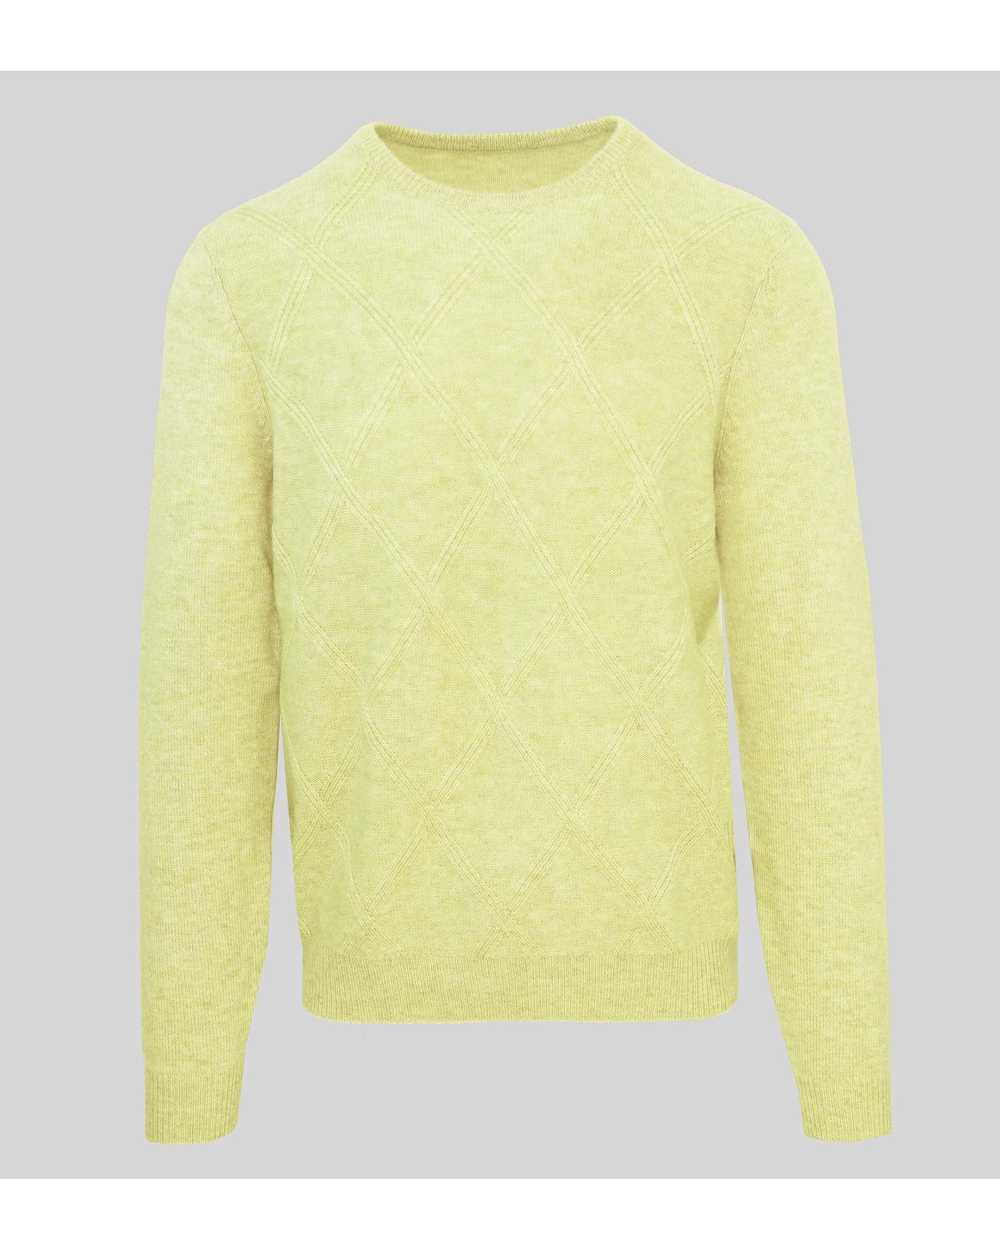 Malo Wool Cashmere Round Neck Sweater - image 1